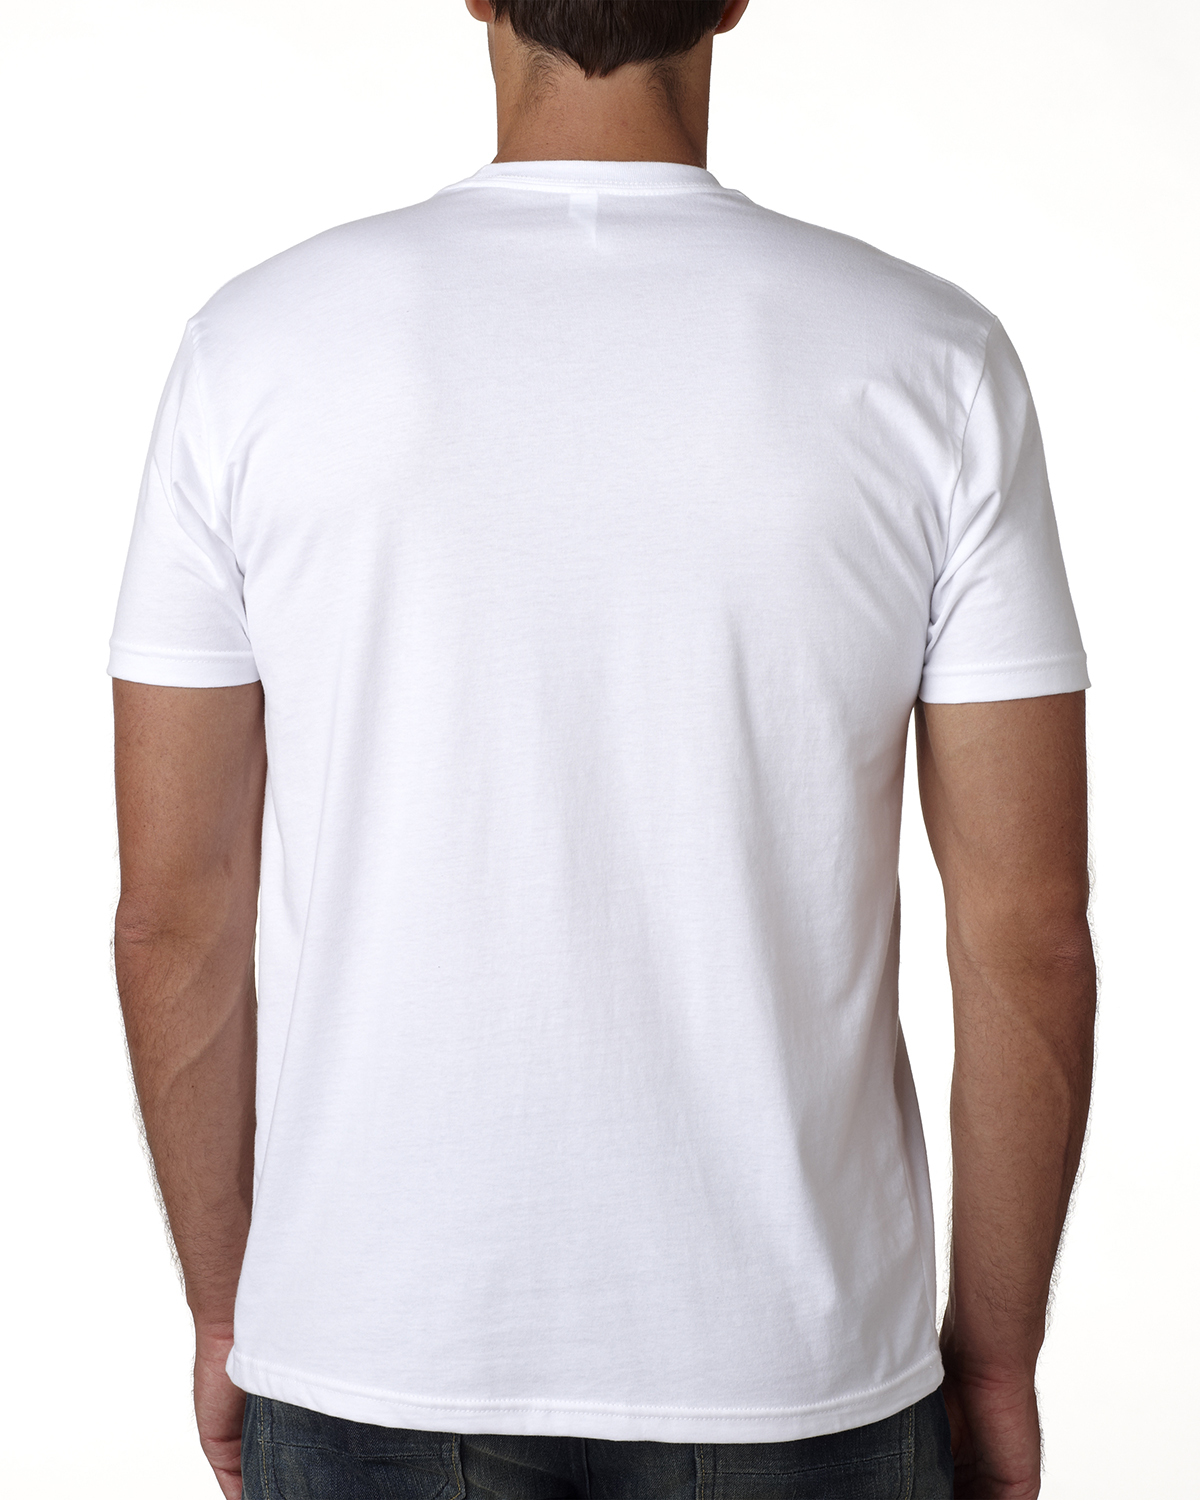 NEW Next Level 100% Cotton Men's Premium Fitted Crew Neck XS-XL T-Shirt ...